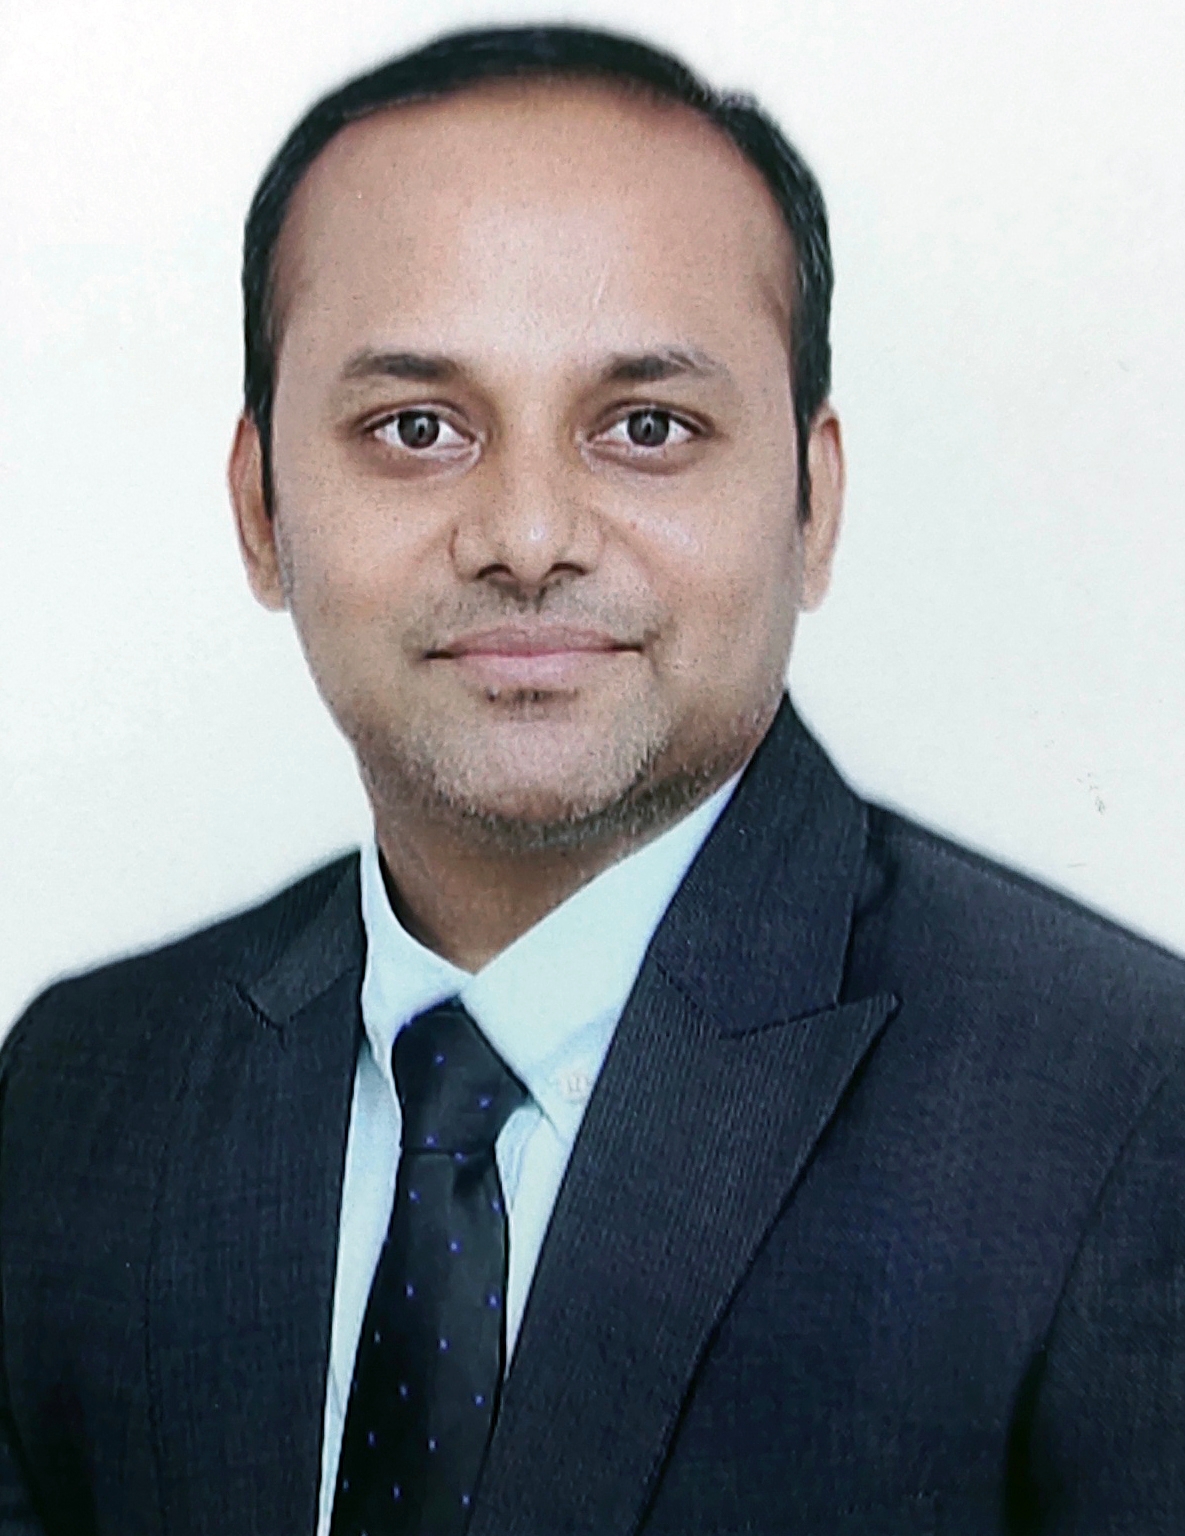 Dr. Prashant Y Kanni